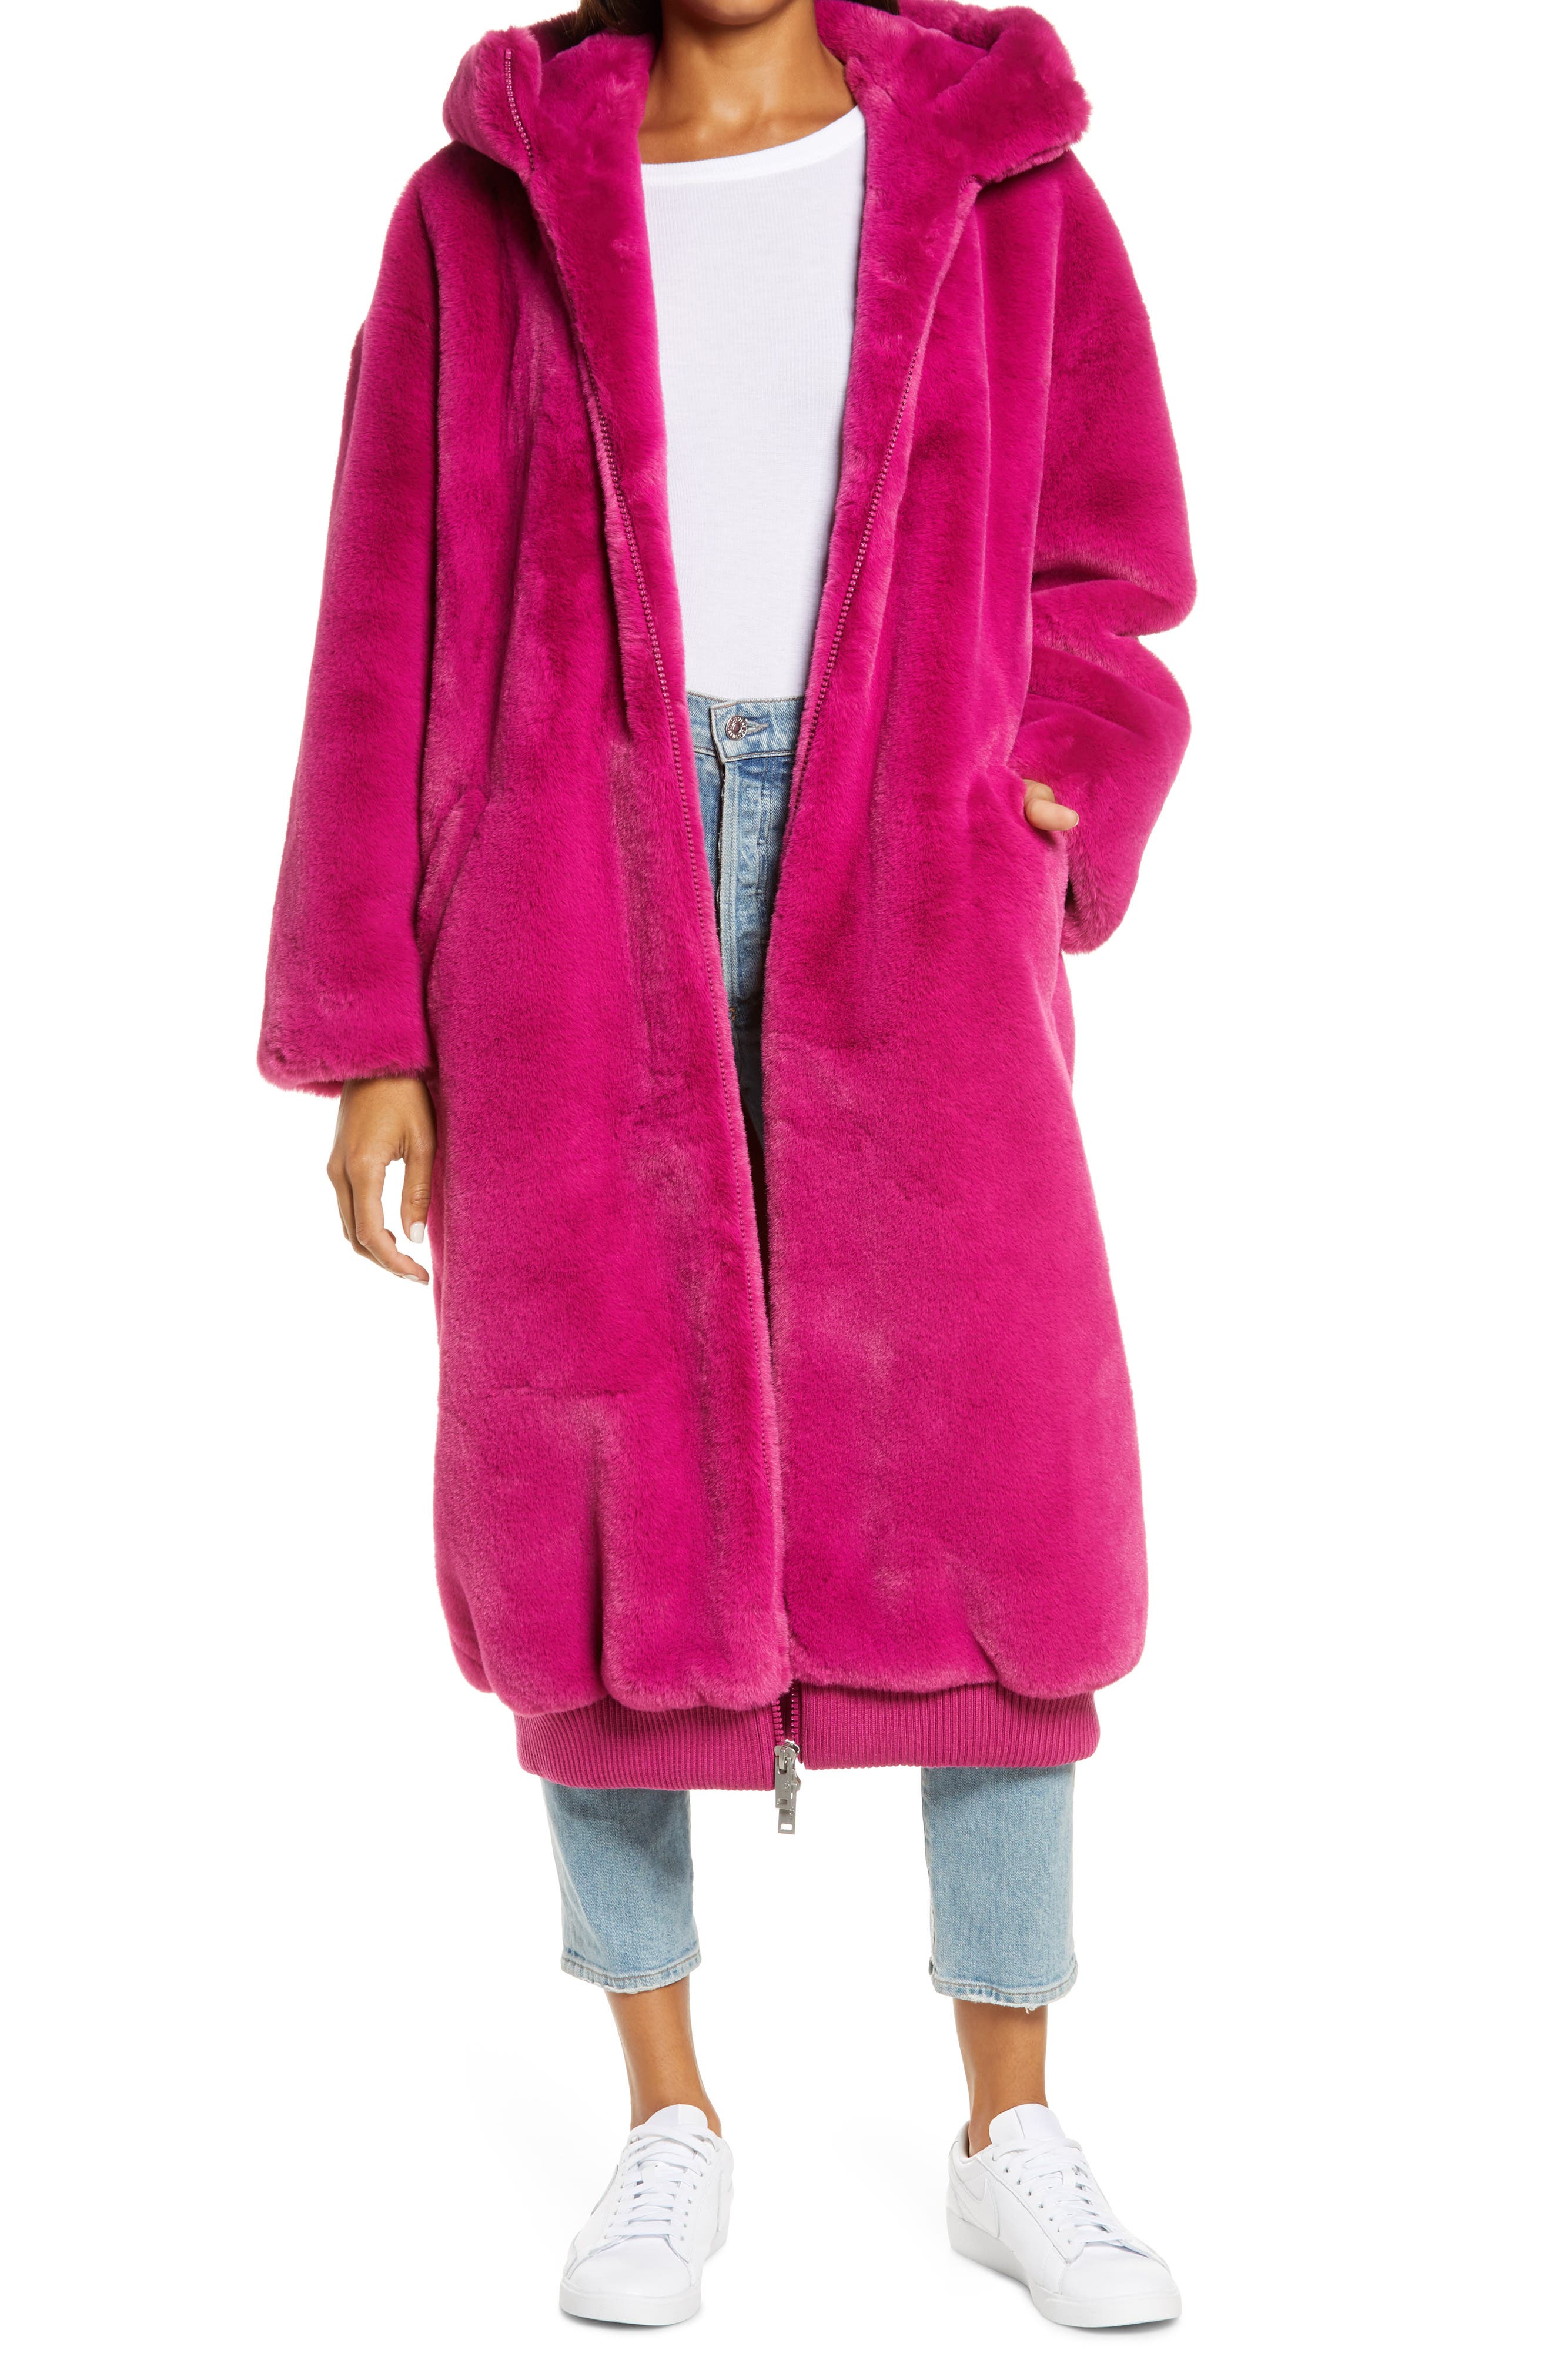 ugg pink jacket